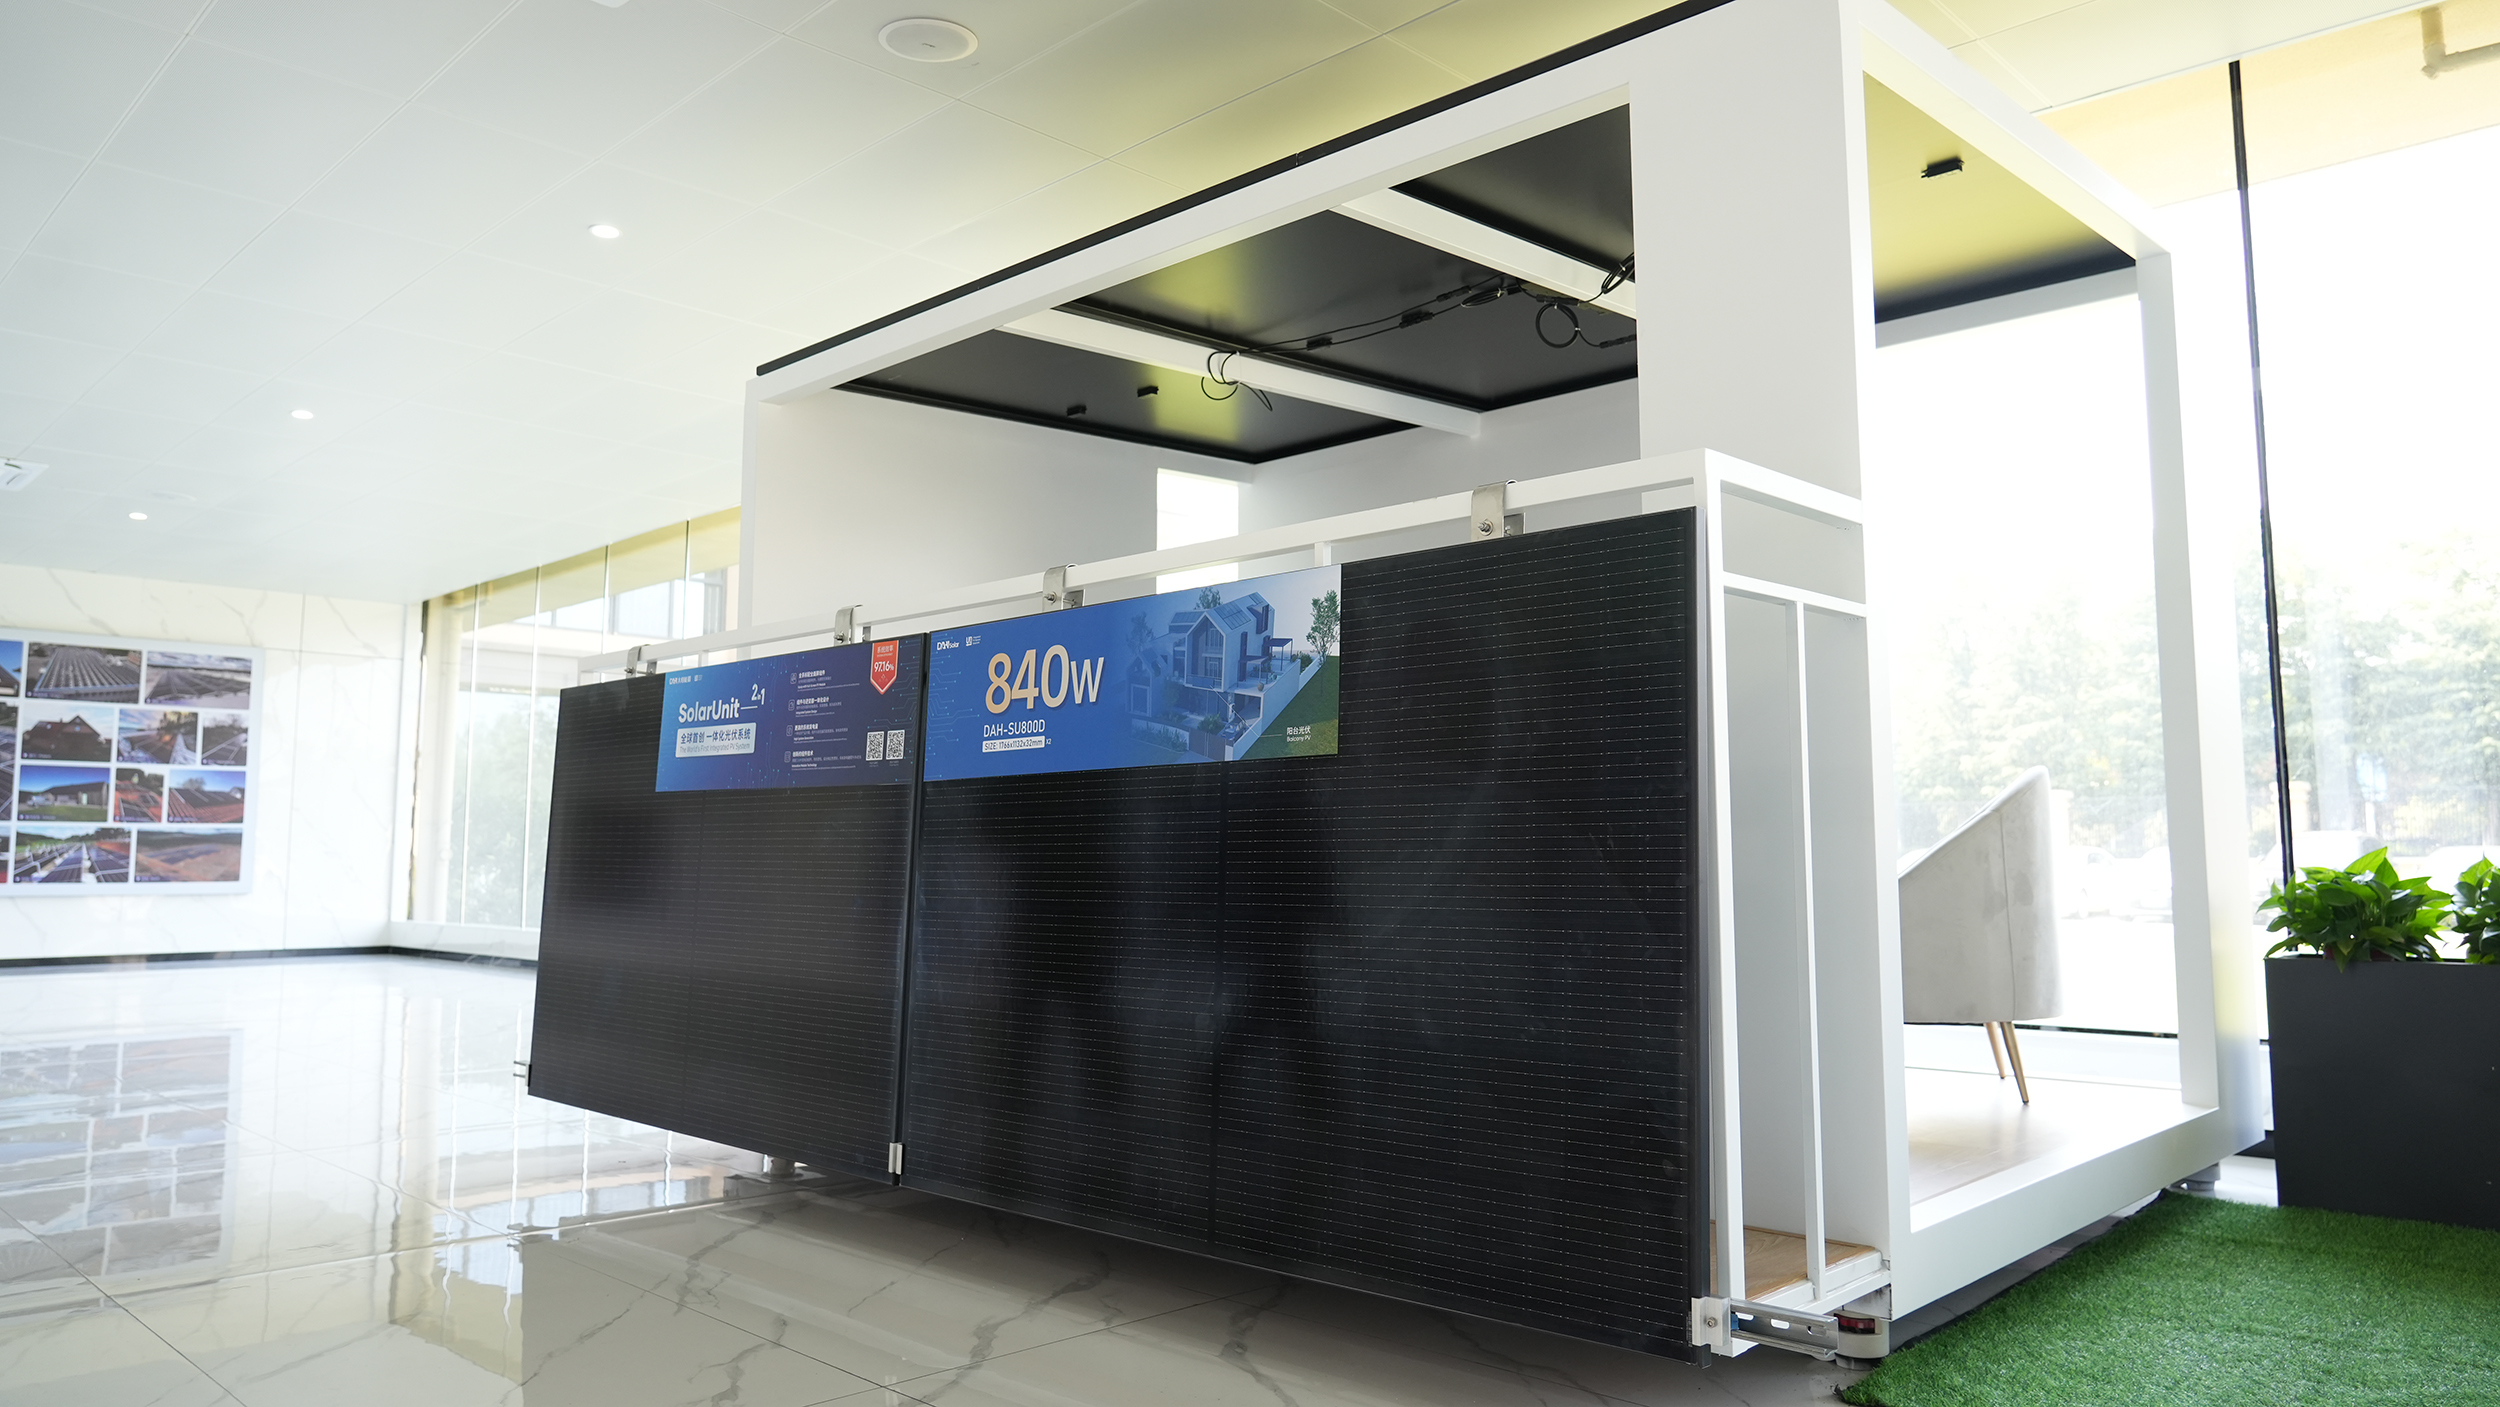 DAH Balkon-Solaranlage DHN-SU800D-G0-DAH Solar